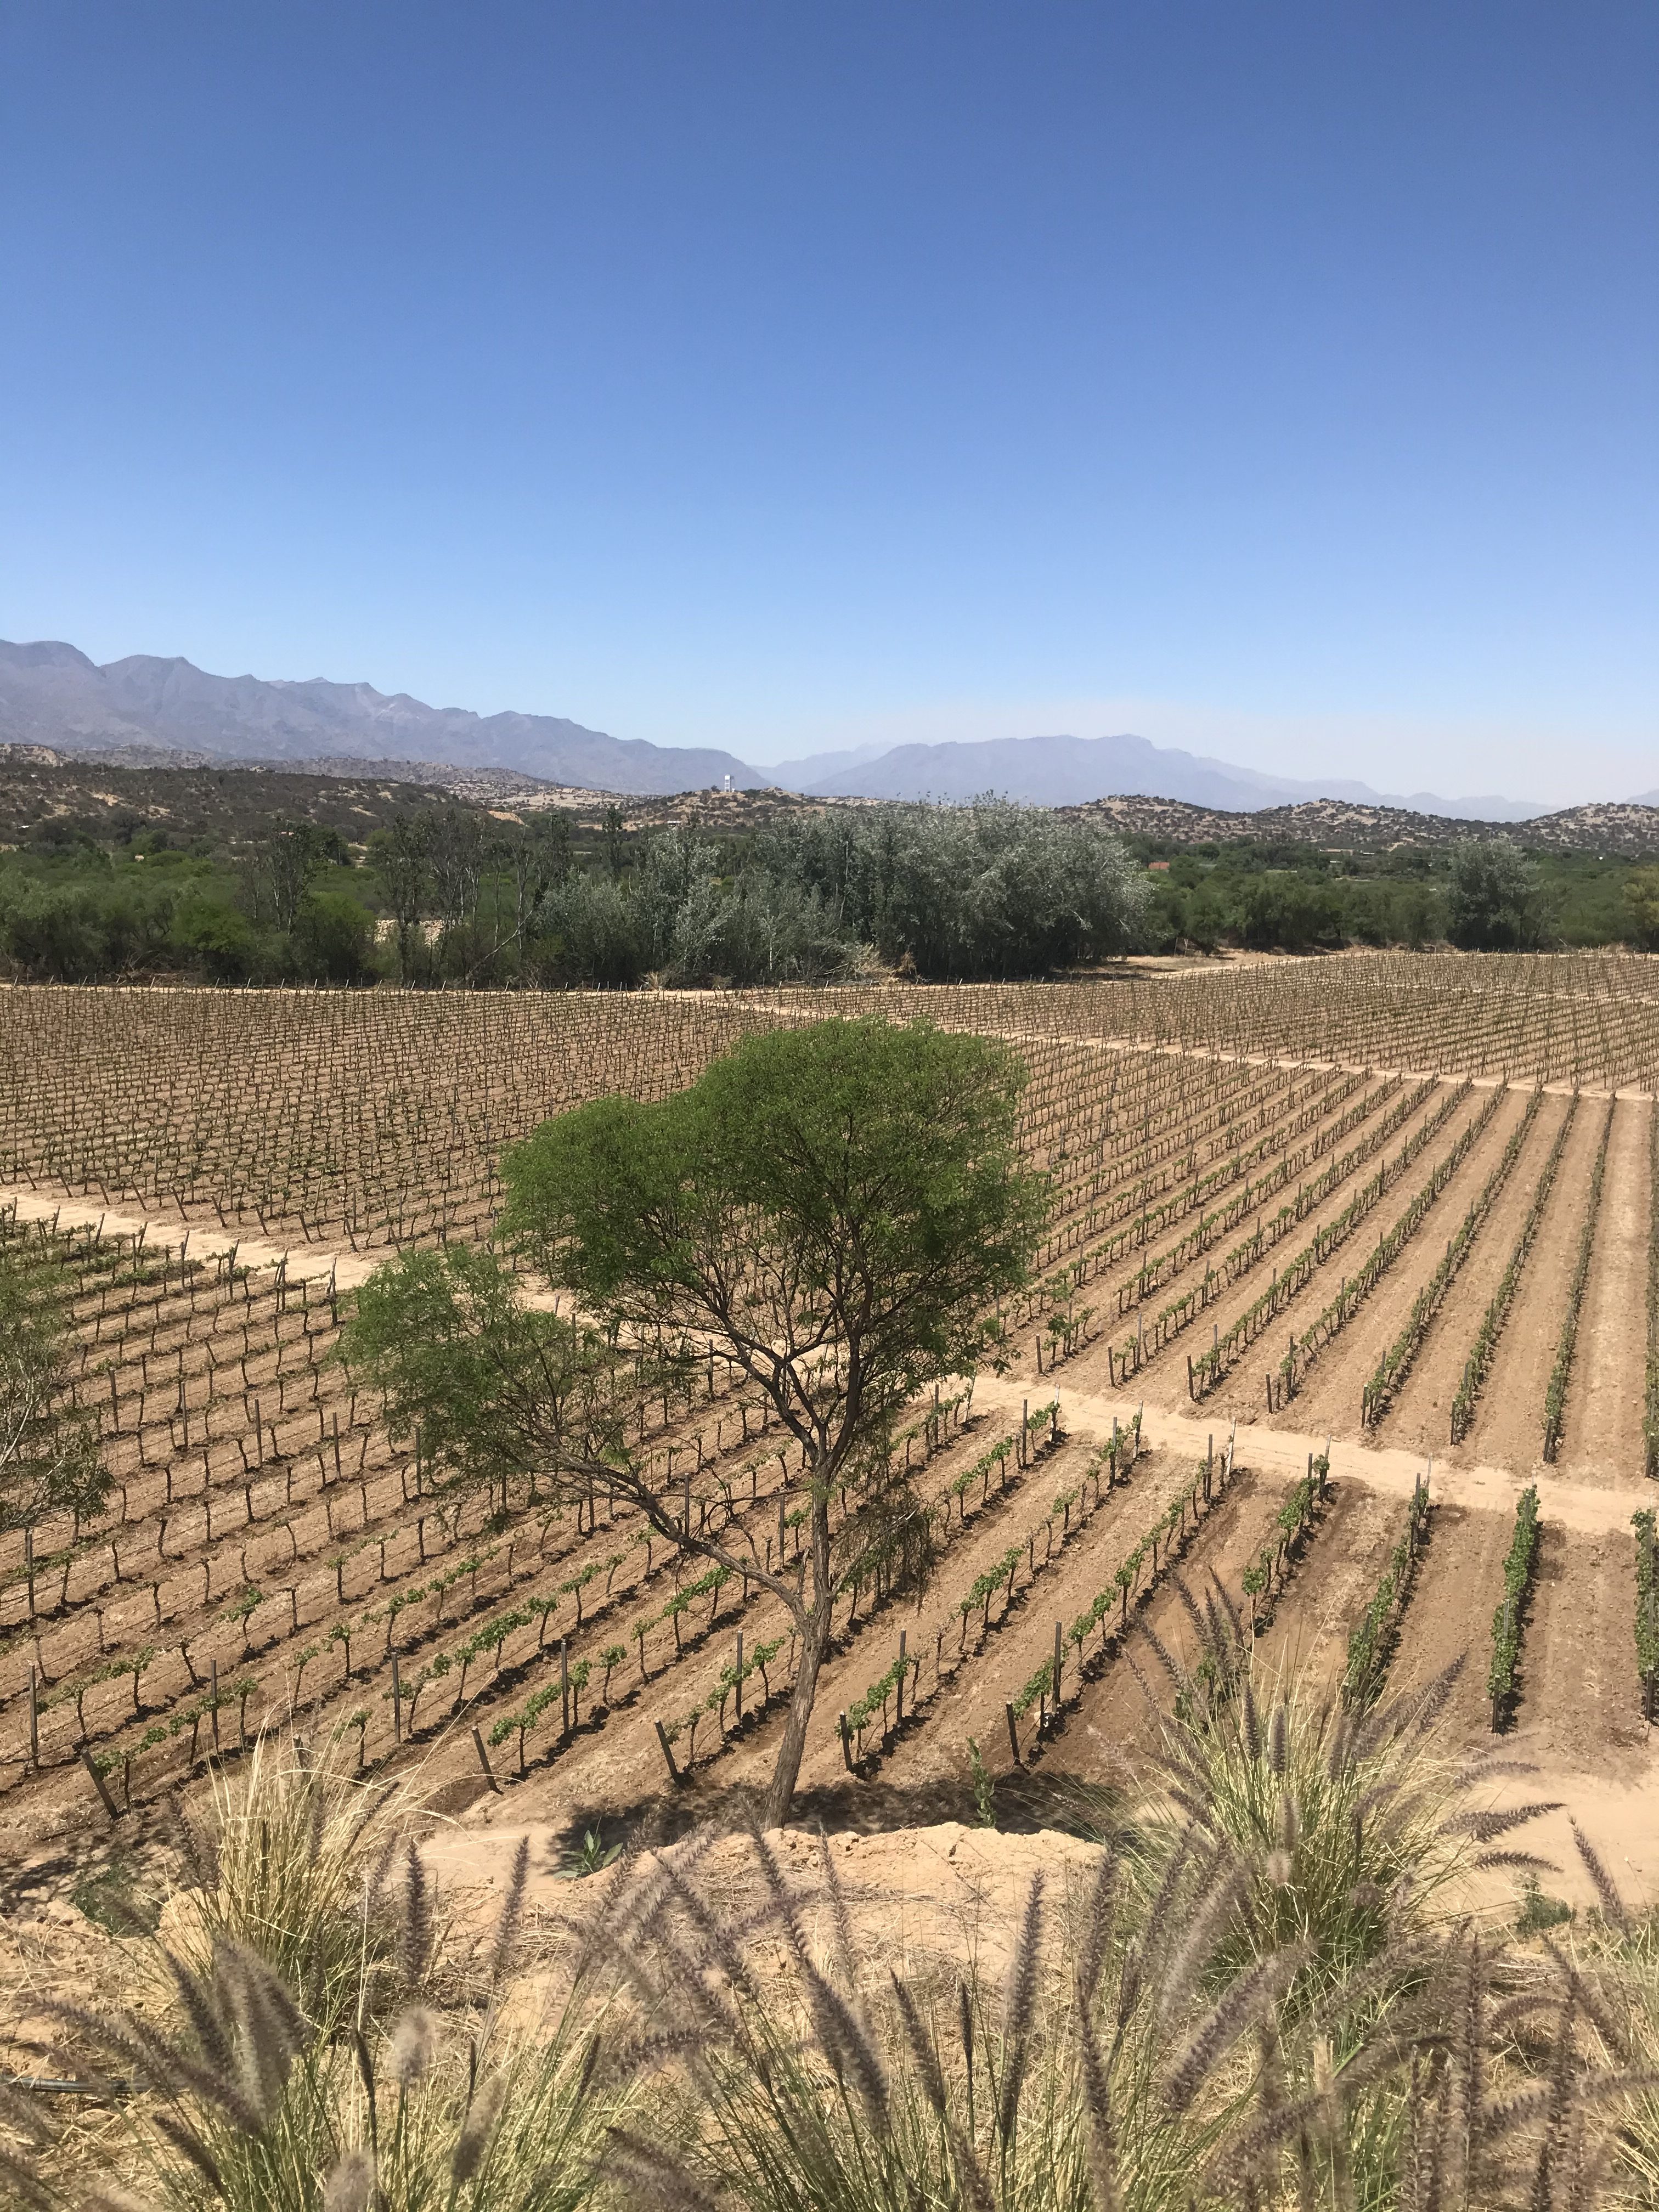 Casa Real's vineyards